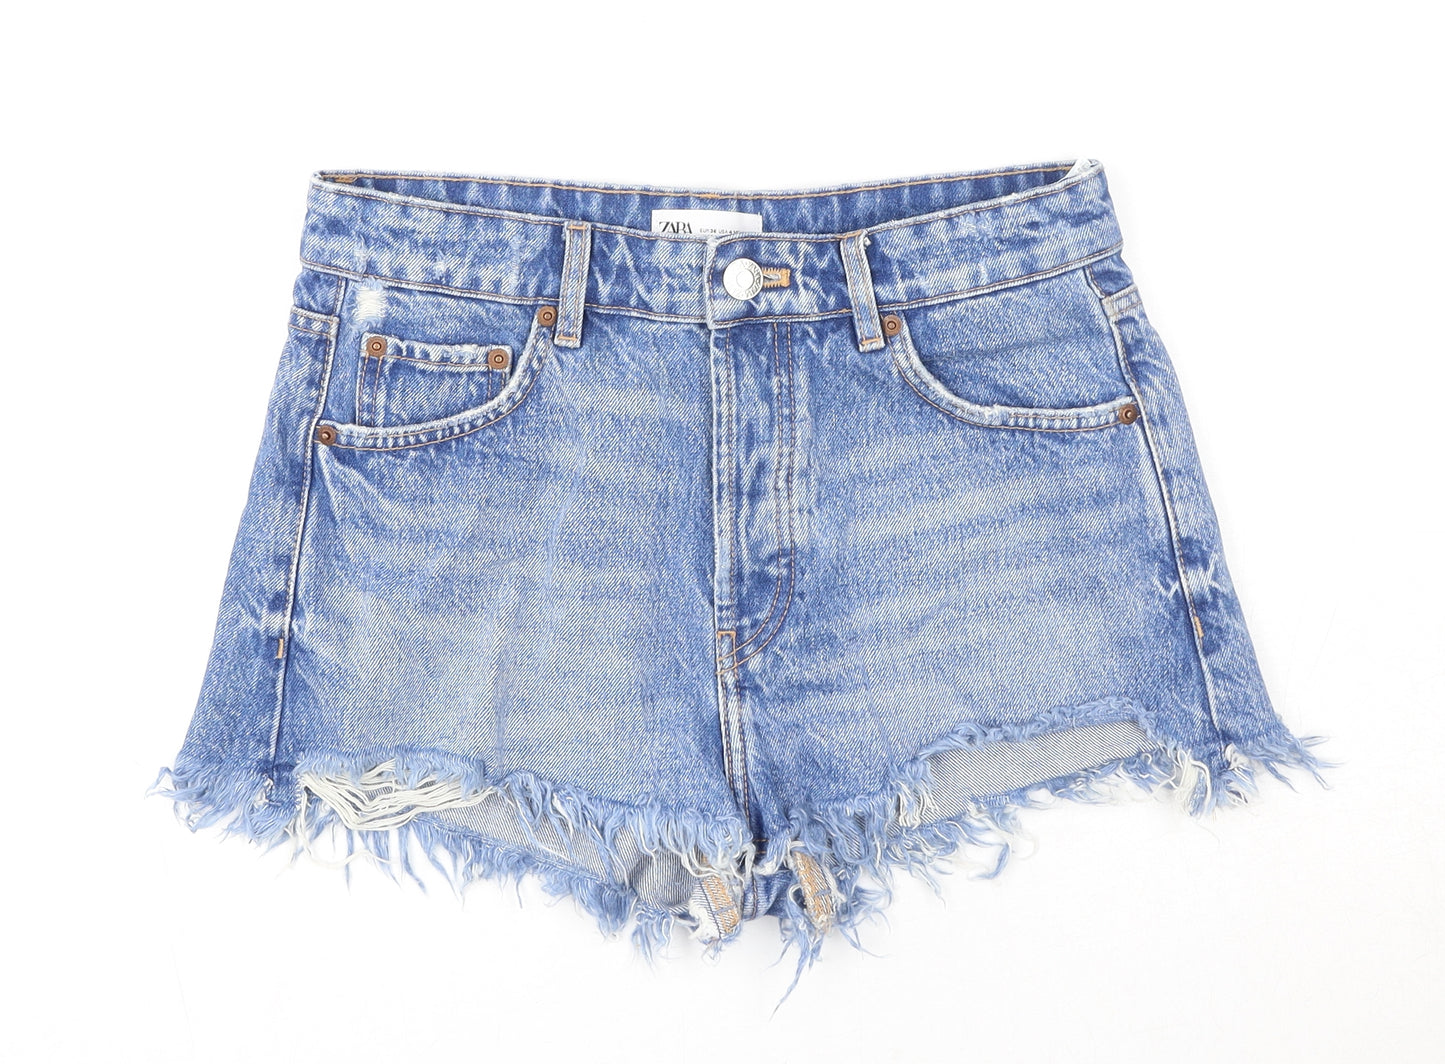 Zara Womens Blue Cotton Boyfriend Shorts Size 8 Regular Zip - Distressed Hems